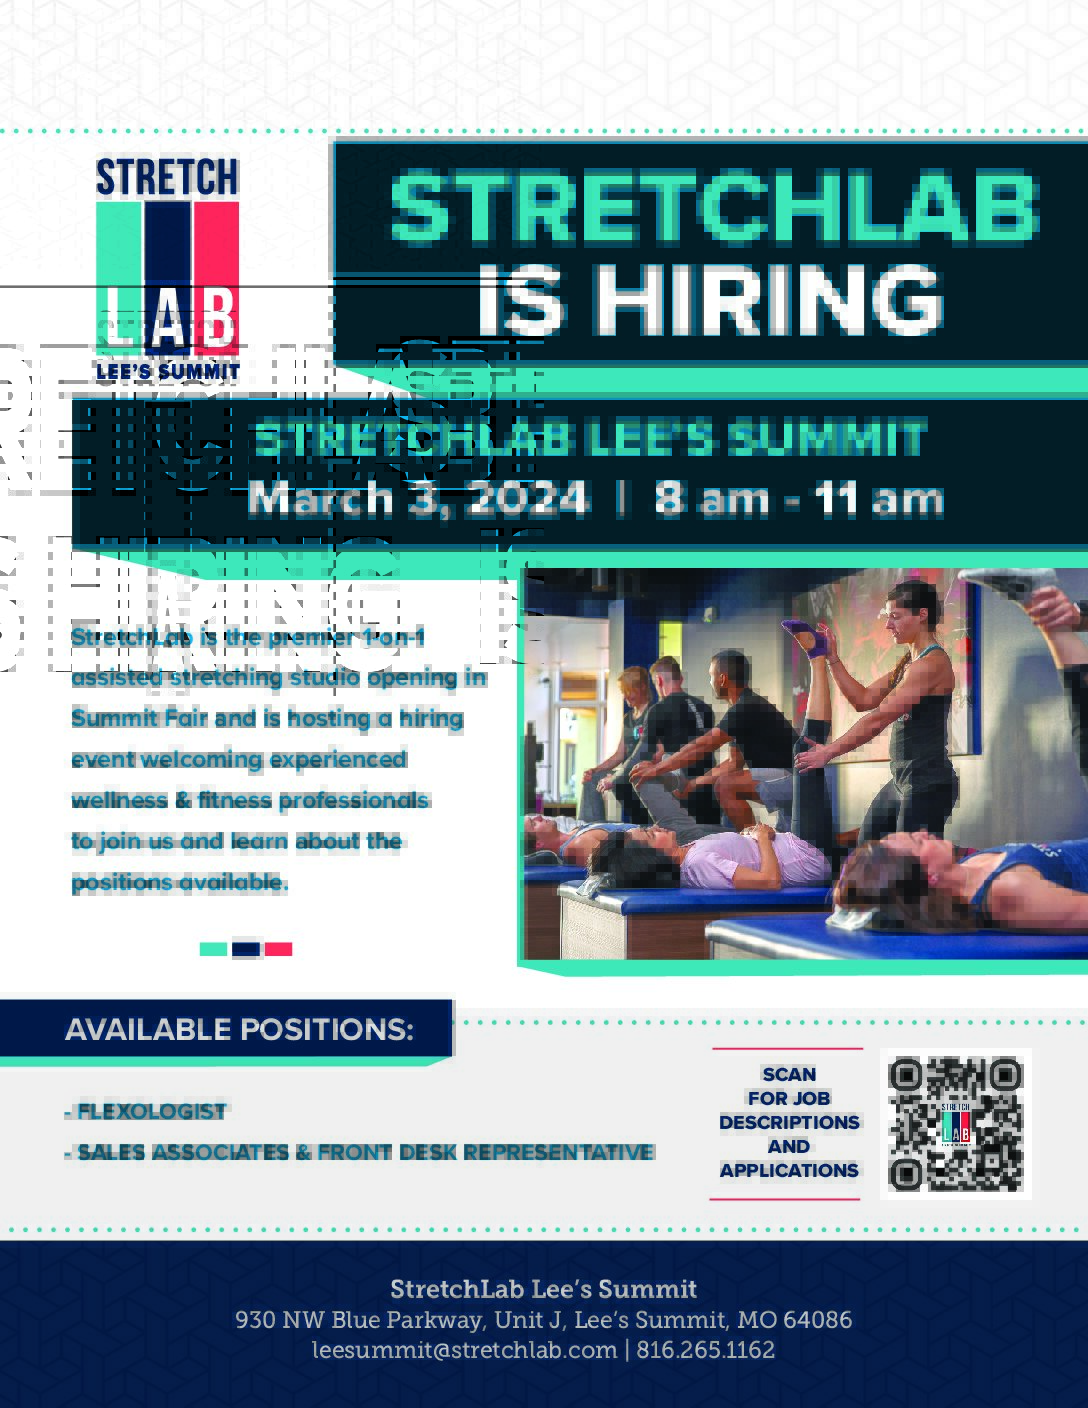 StretchLab is Hiring